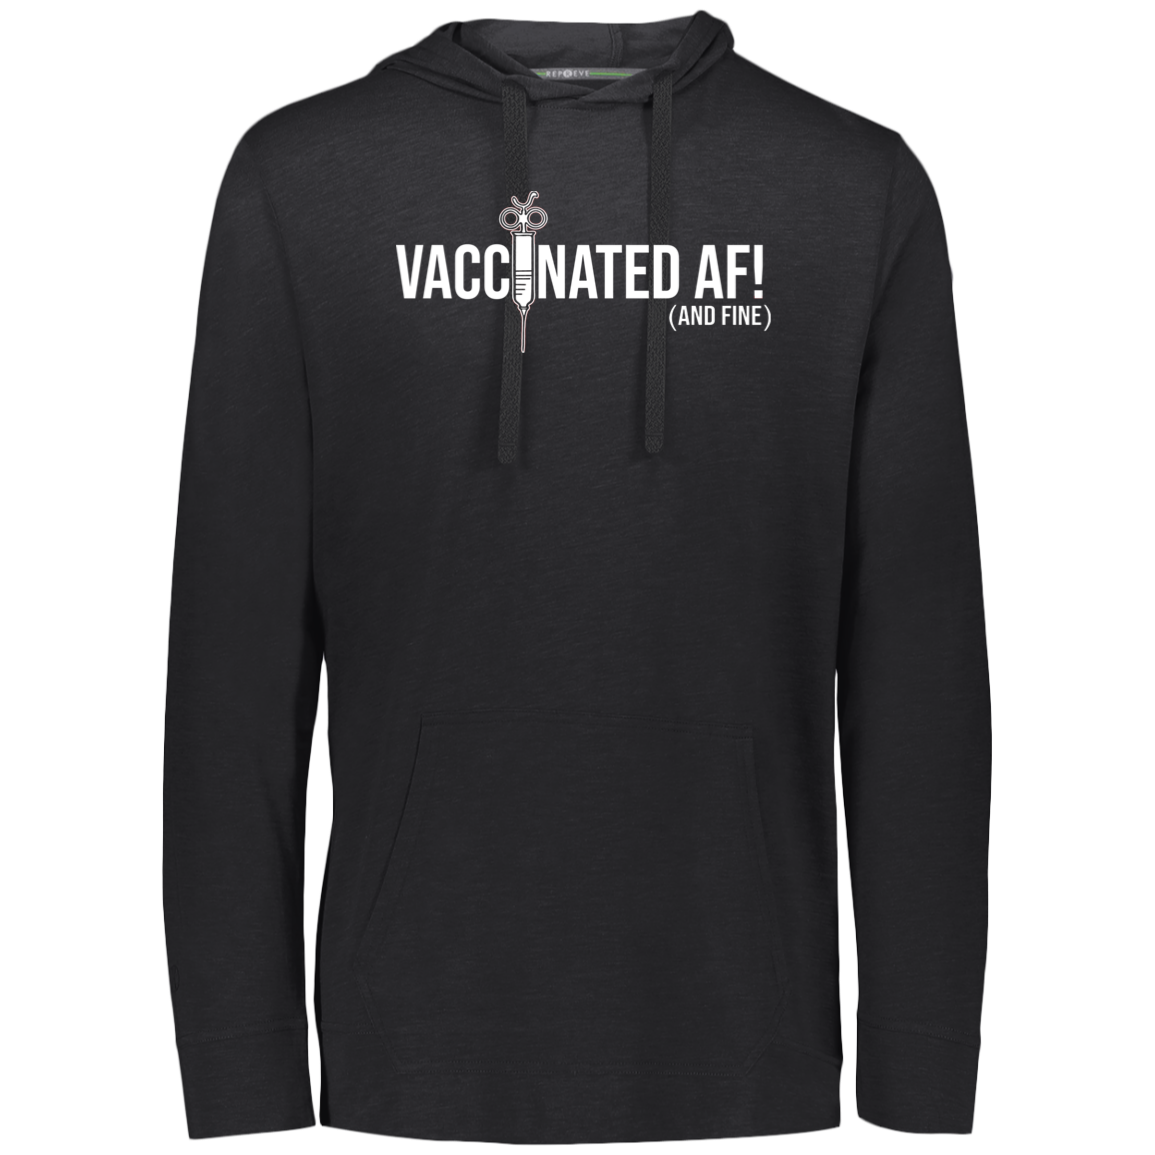 ArtichokeUSA Custom Design. Vaccinated AF (and fine). Eco Triblend T-Shirt Hoodie